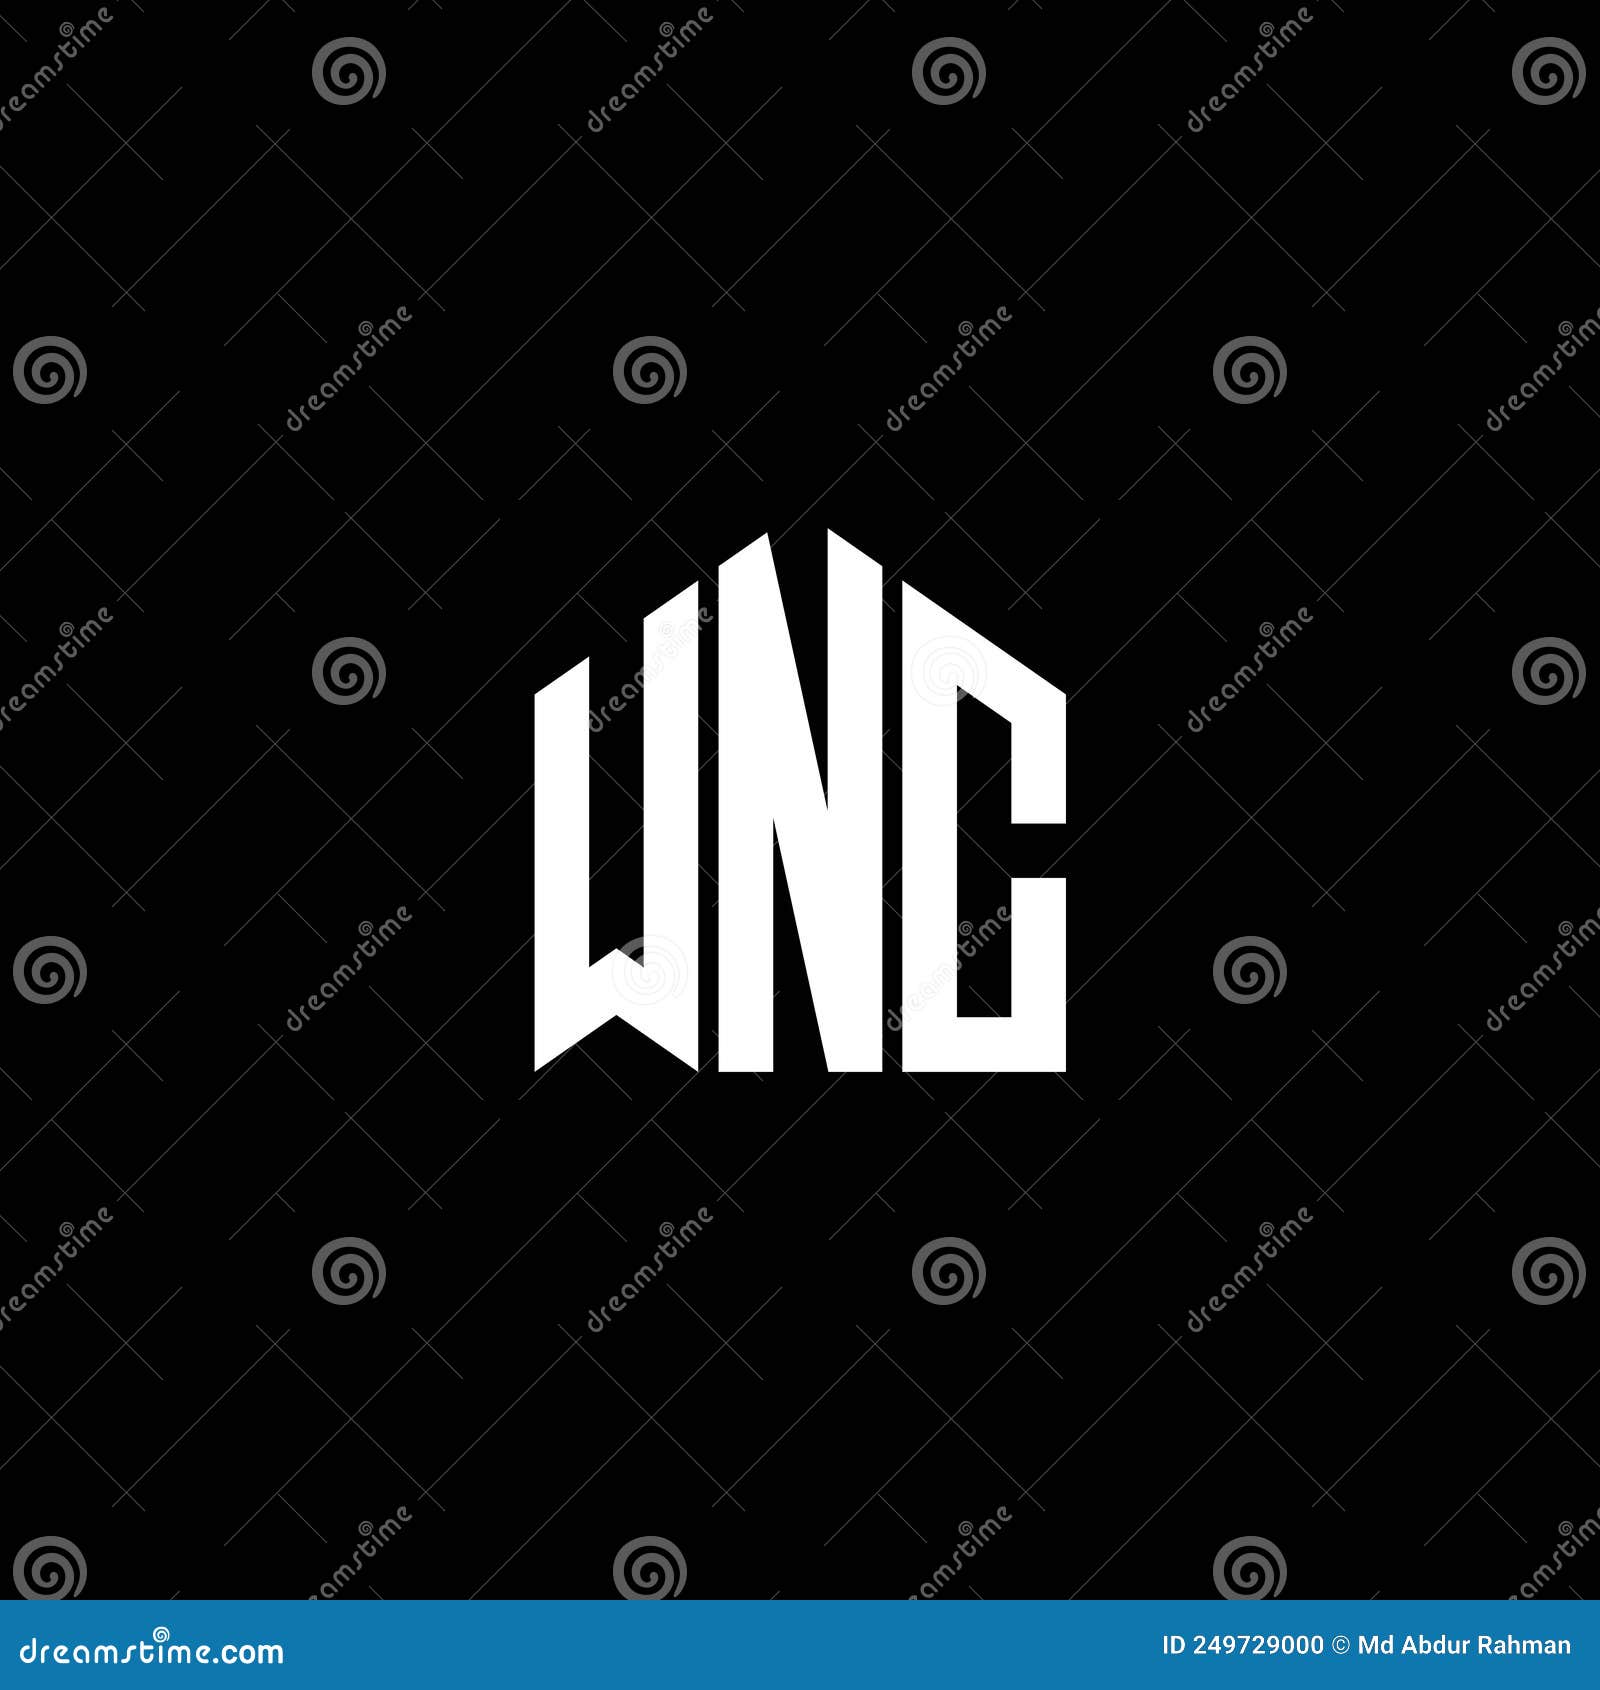 wnc letter logo  on black background. wnc creative initials letter logo concept. wnc letter 